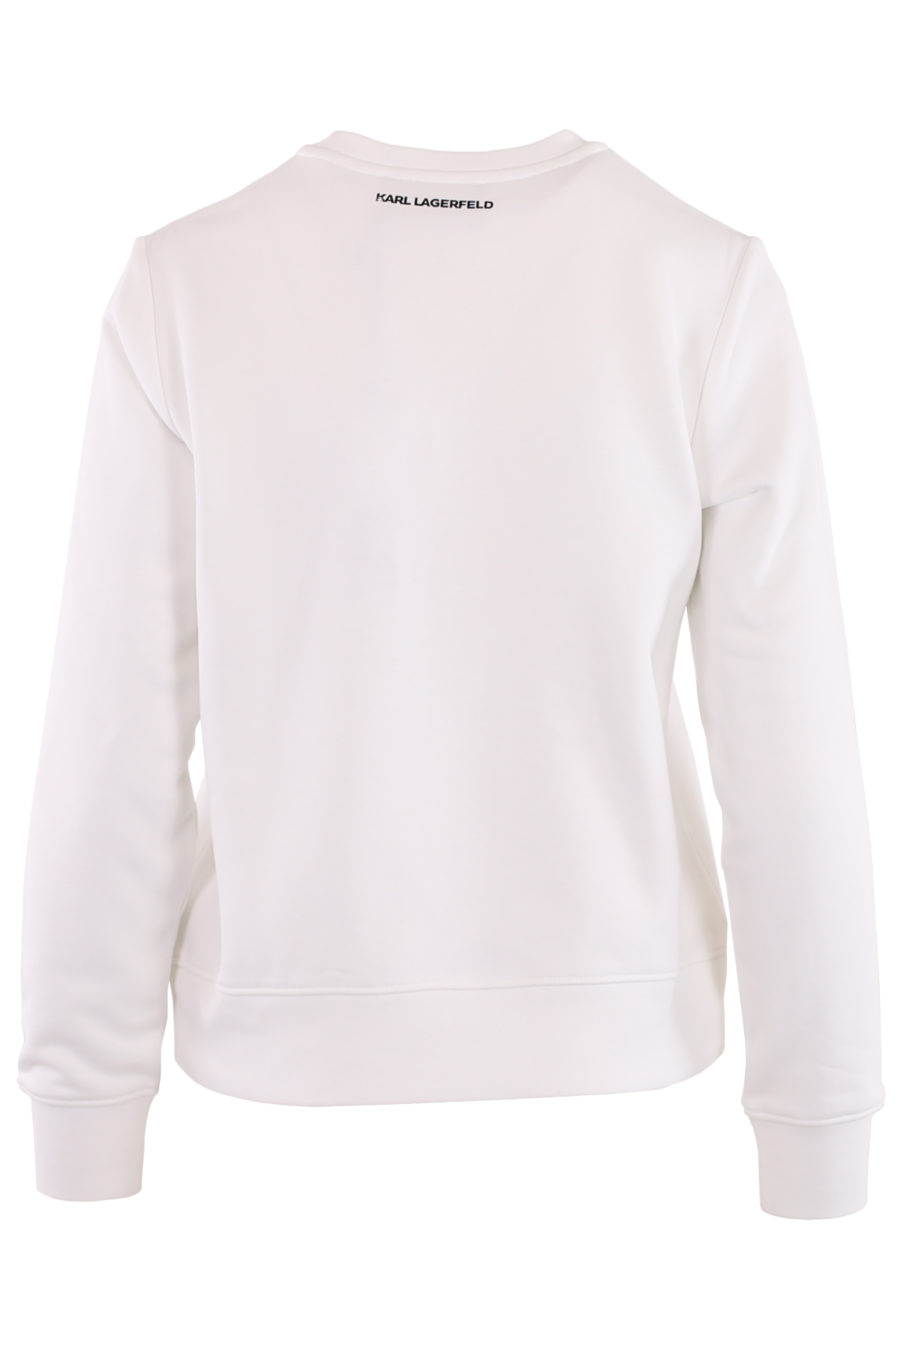 White sweatshirt with logo "Karl" mini - df8d9efbf29112fe9947fdc0745482c6b47ee4a4